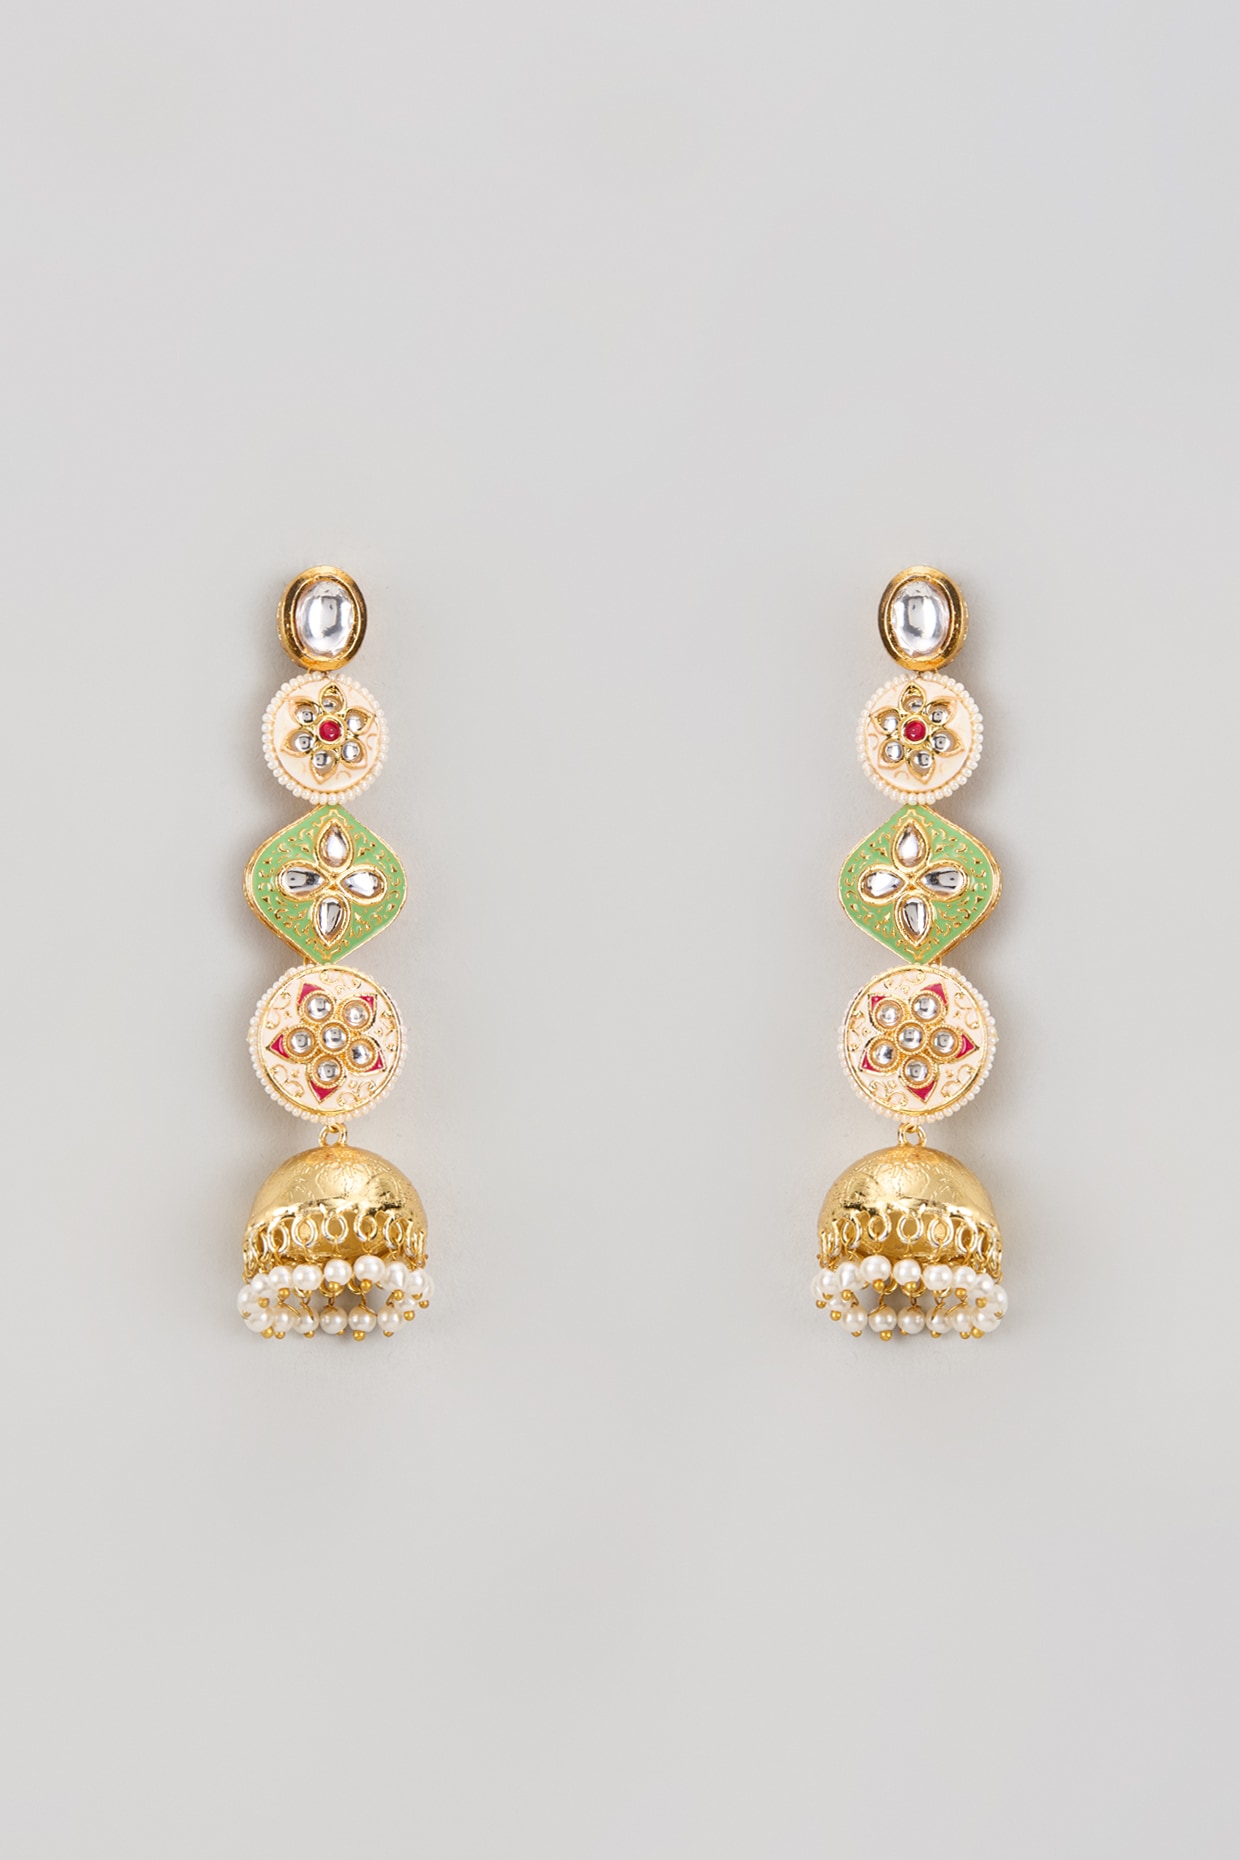 Meena Jewelry Mehendi Polish Beautiful Fancy Design Cluster Pearls Meenakari  Jhumka Earrings at Rs 290/pair | Meena Jewellery in Mumbai | ID: 6824440633